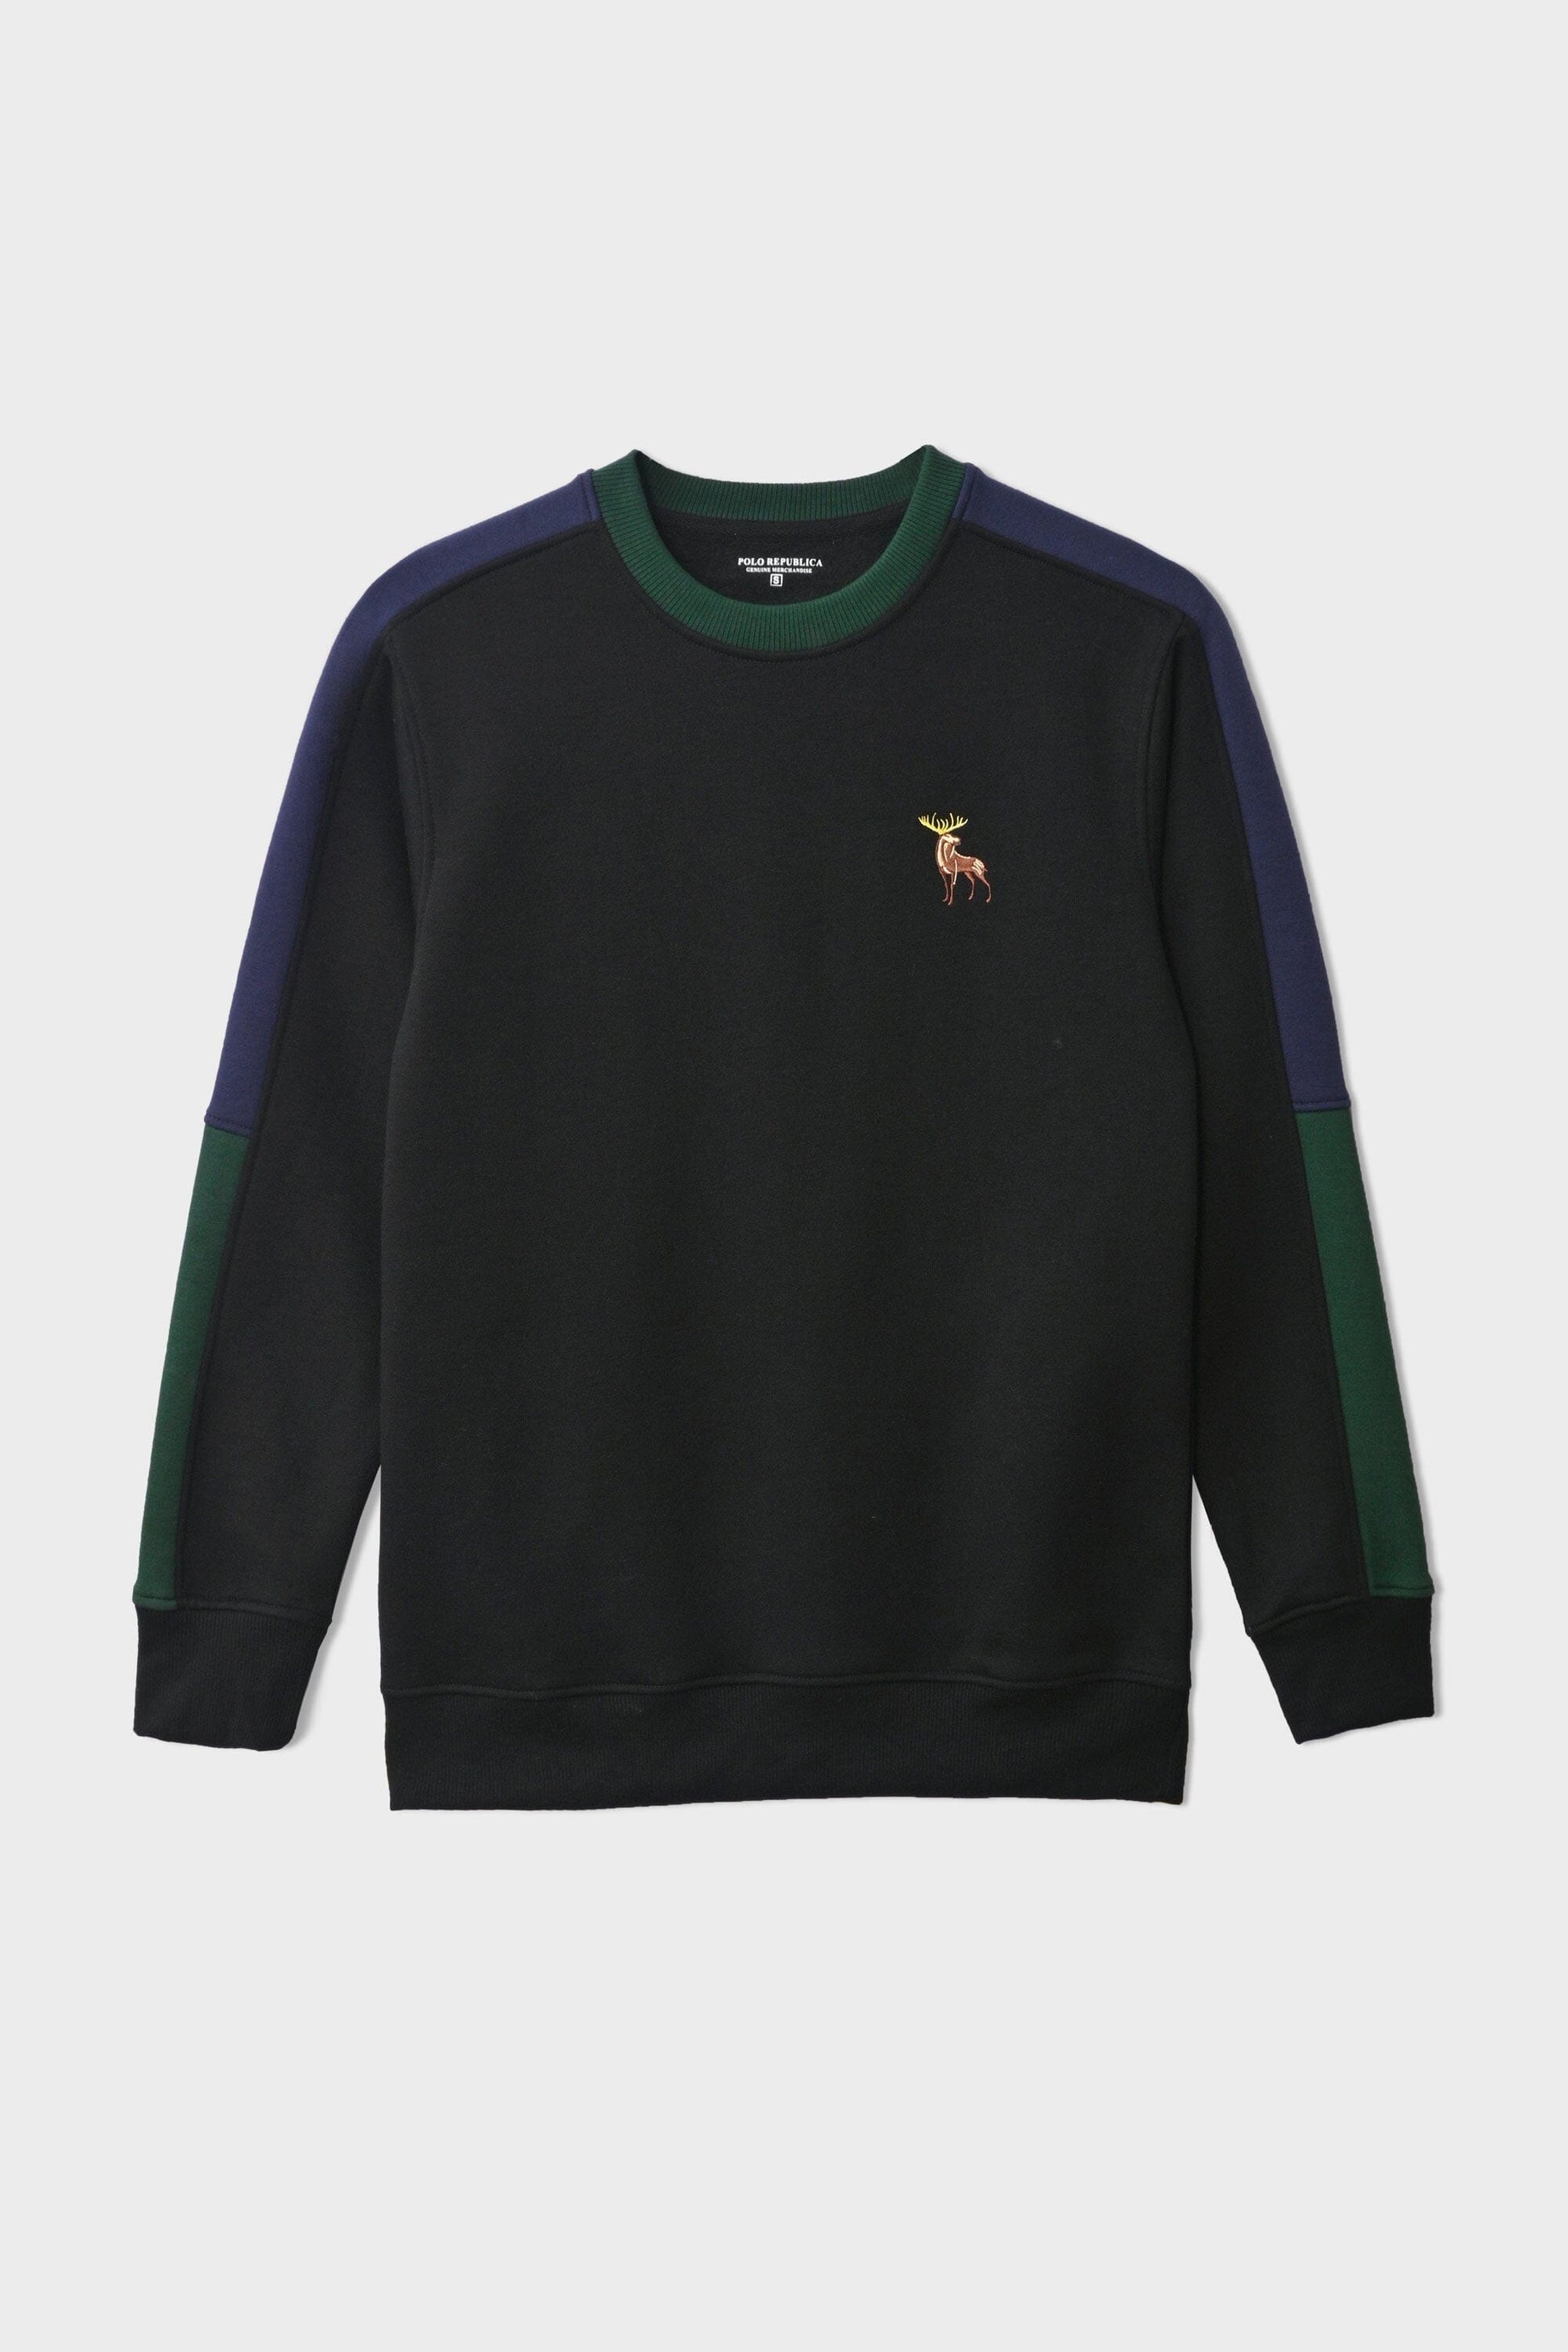 Polo Republica Men's Contrast Shoulder Moose Embroidered Fleece Sweat Shirt Men's Sweat Shirt Polo Republica 